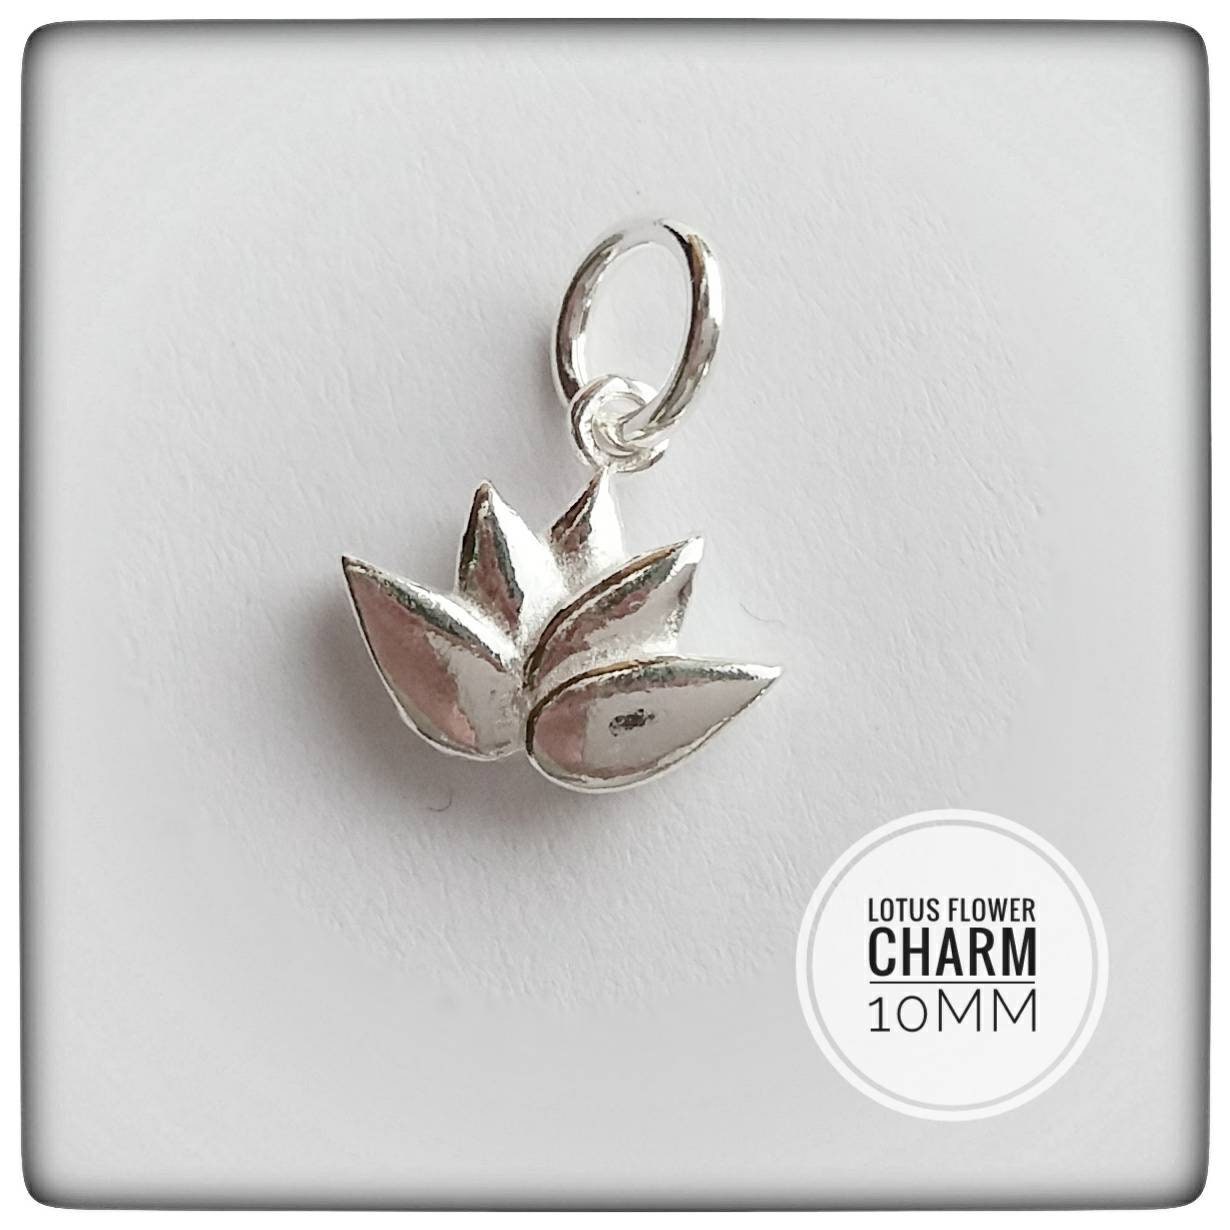 18K Gold Lotus Flower Pendant - Good Luck Charm - 18K Gold Flower Pendant - Charms for Bracelets - Jewelry Gift - Jewelry Findings